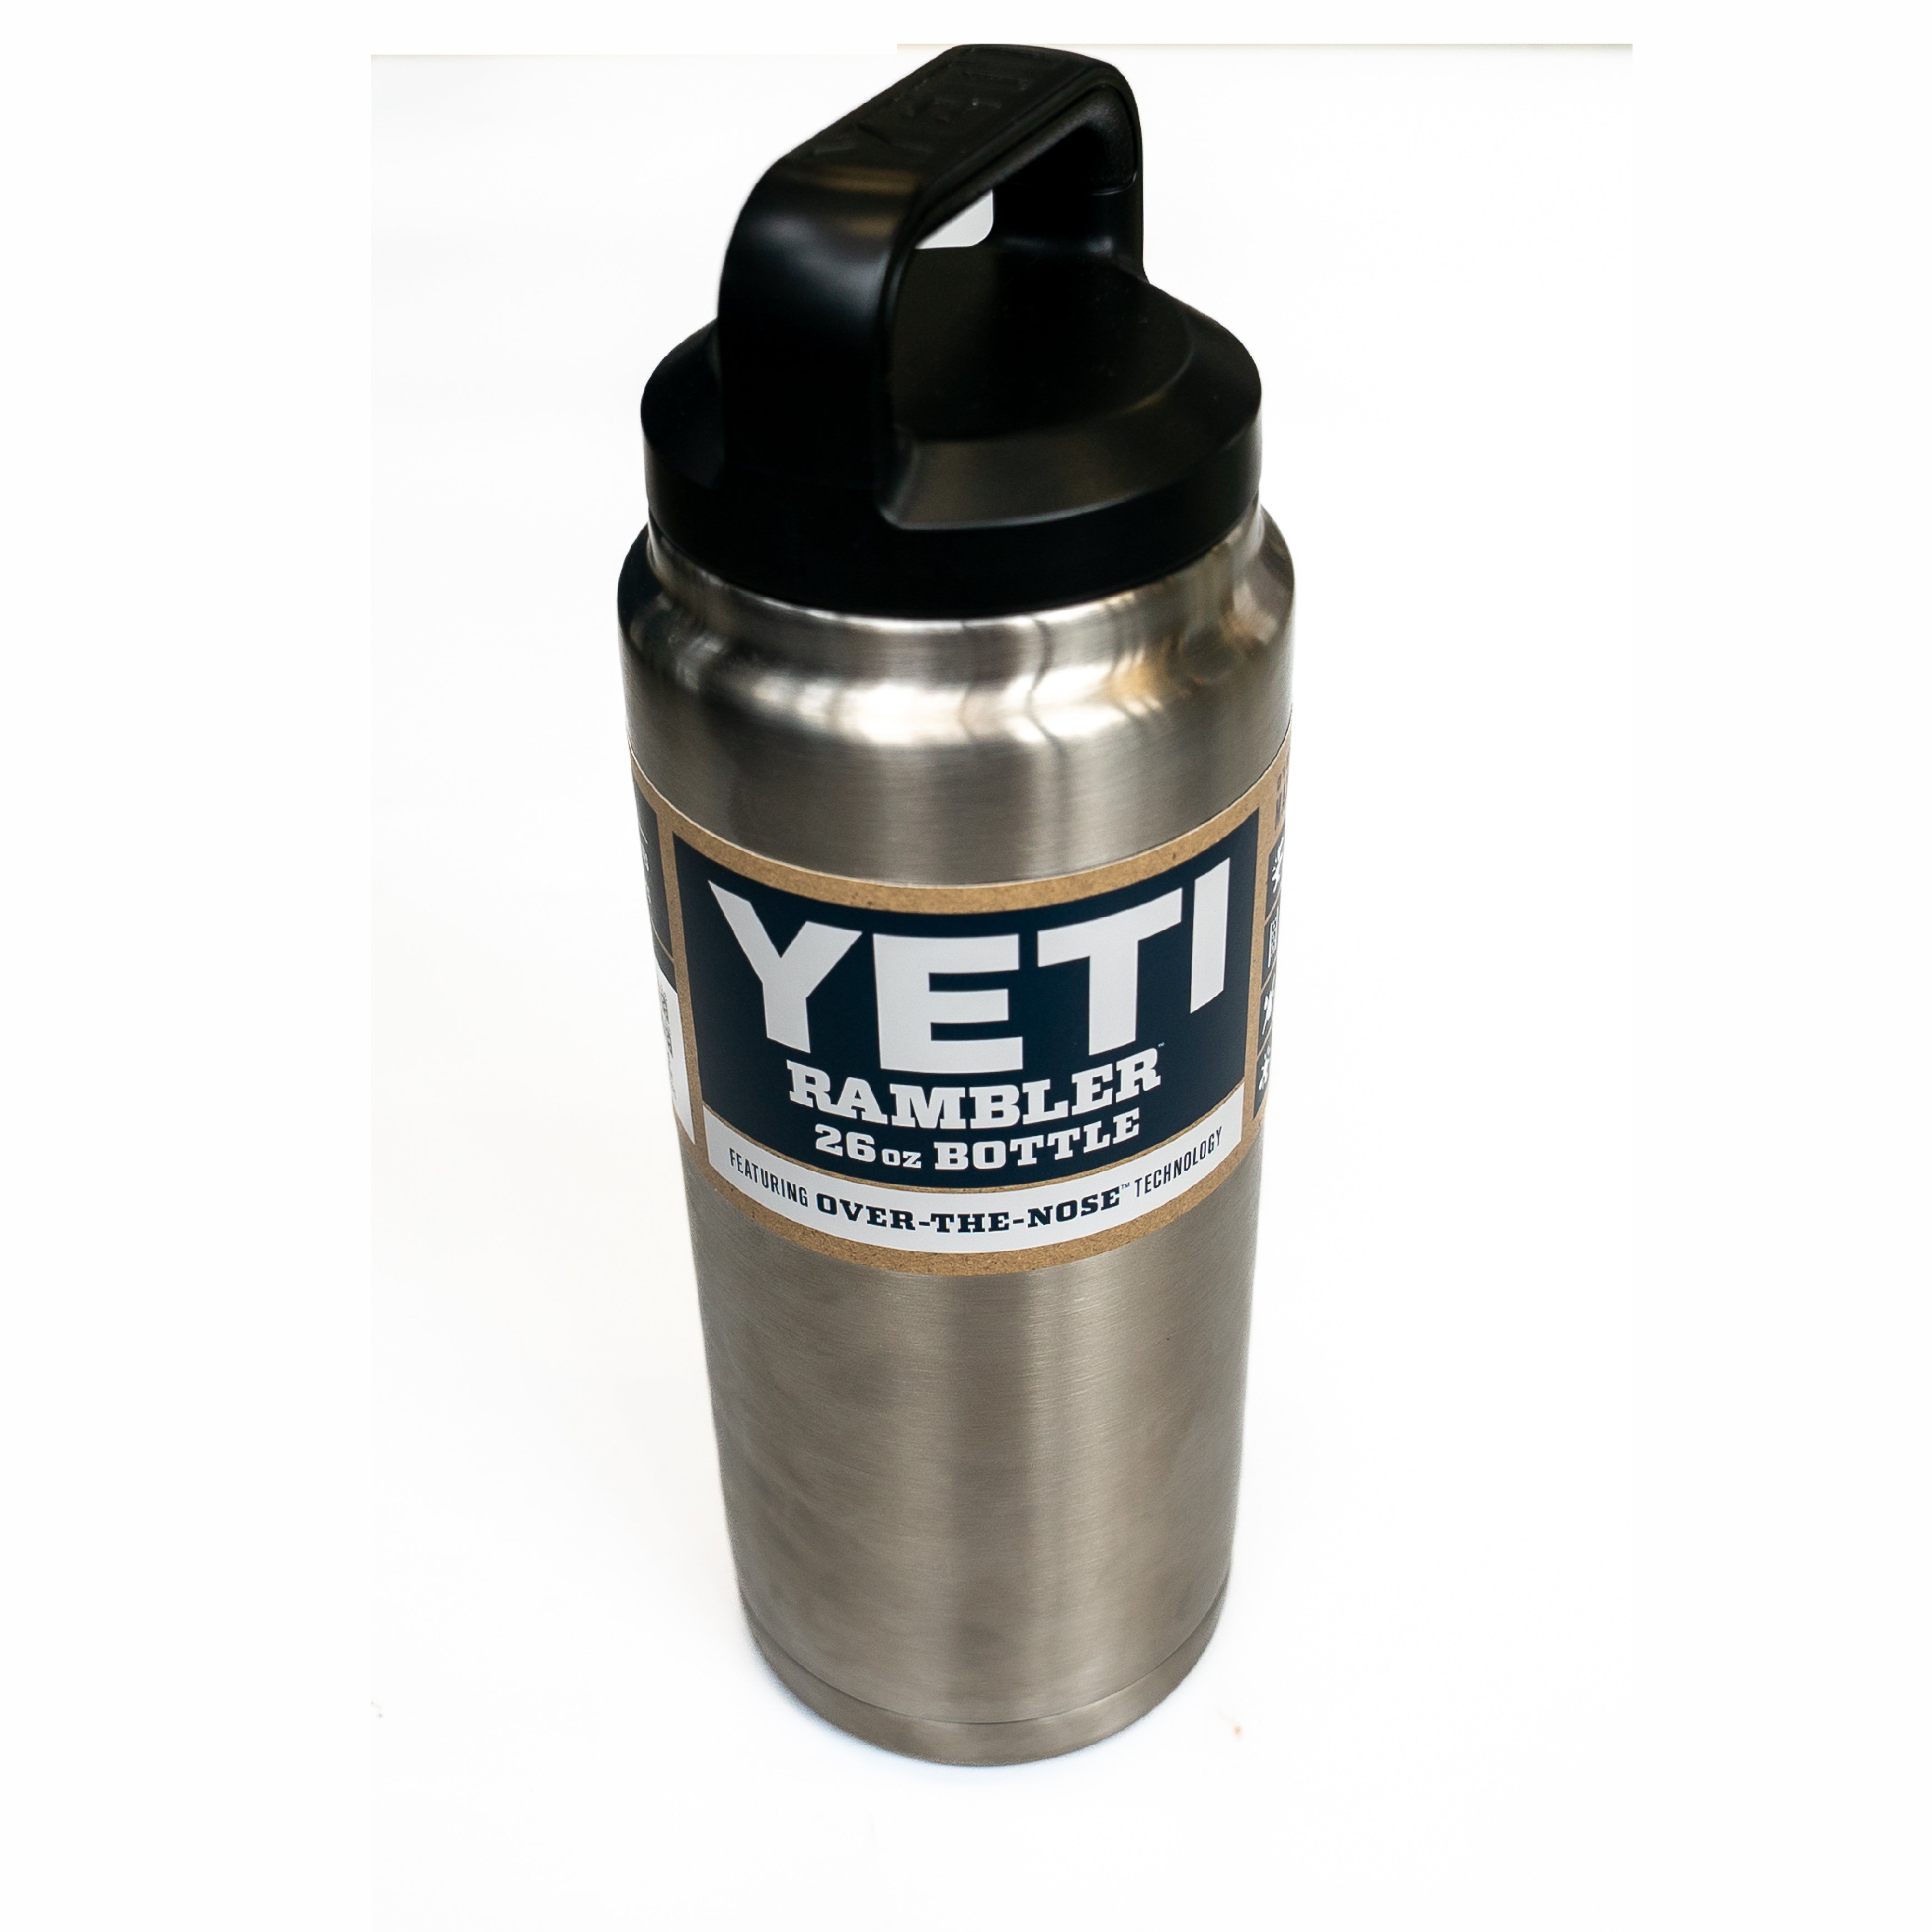 YETI Rambler Stainless Steel Copper Beverage Insulator at